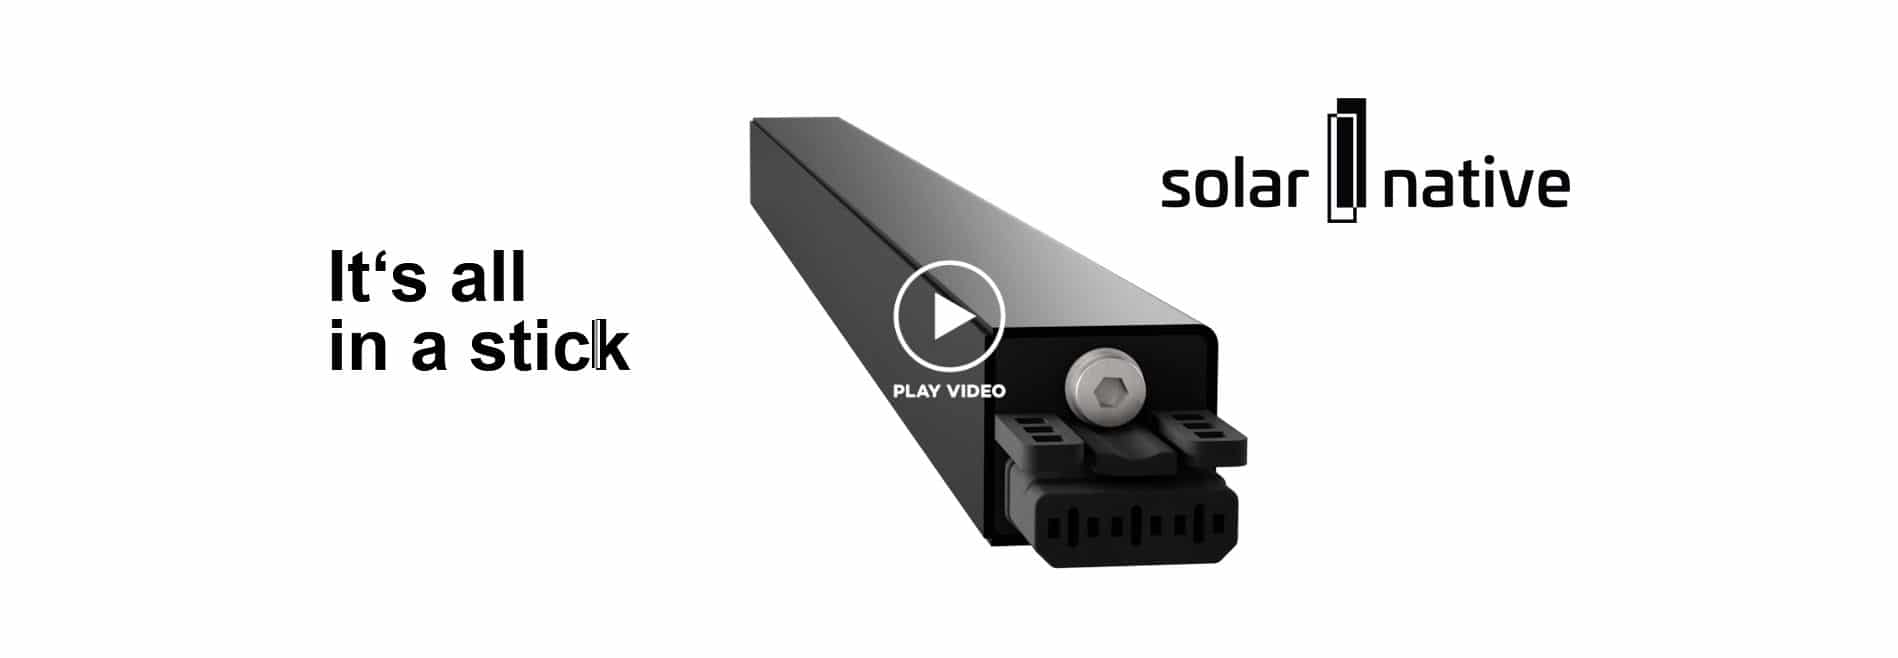 Video_Solarnative-mit-Play-Button